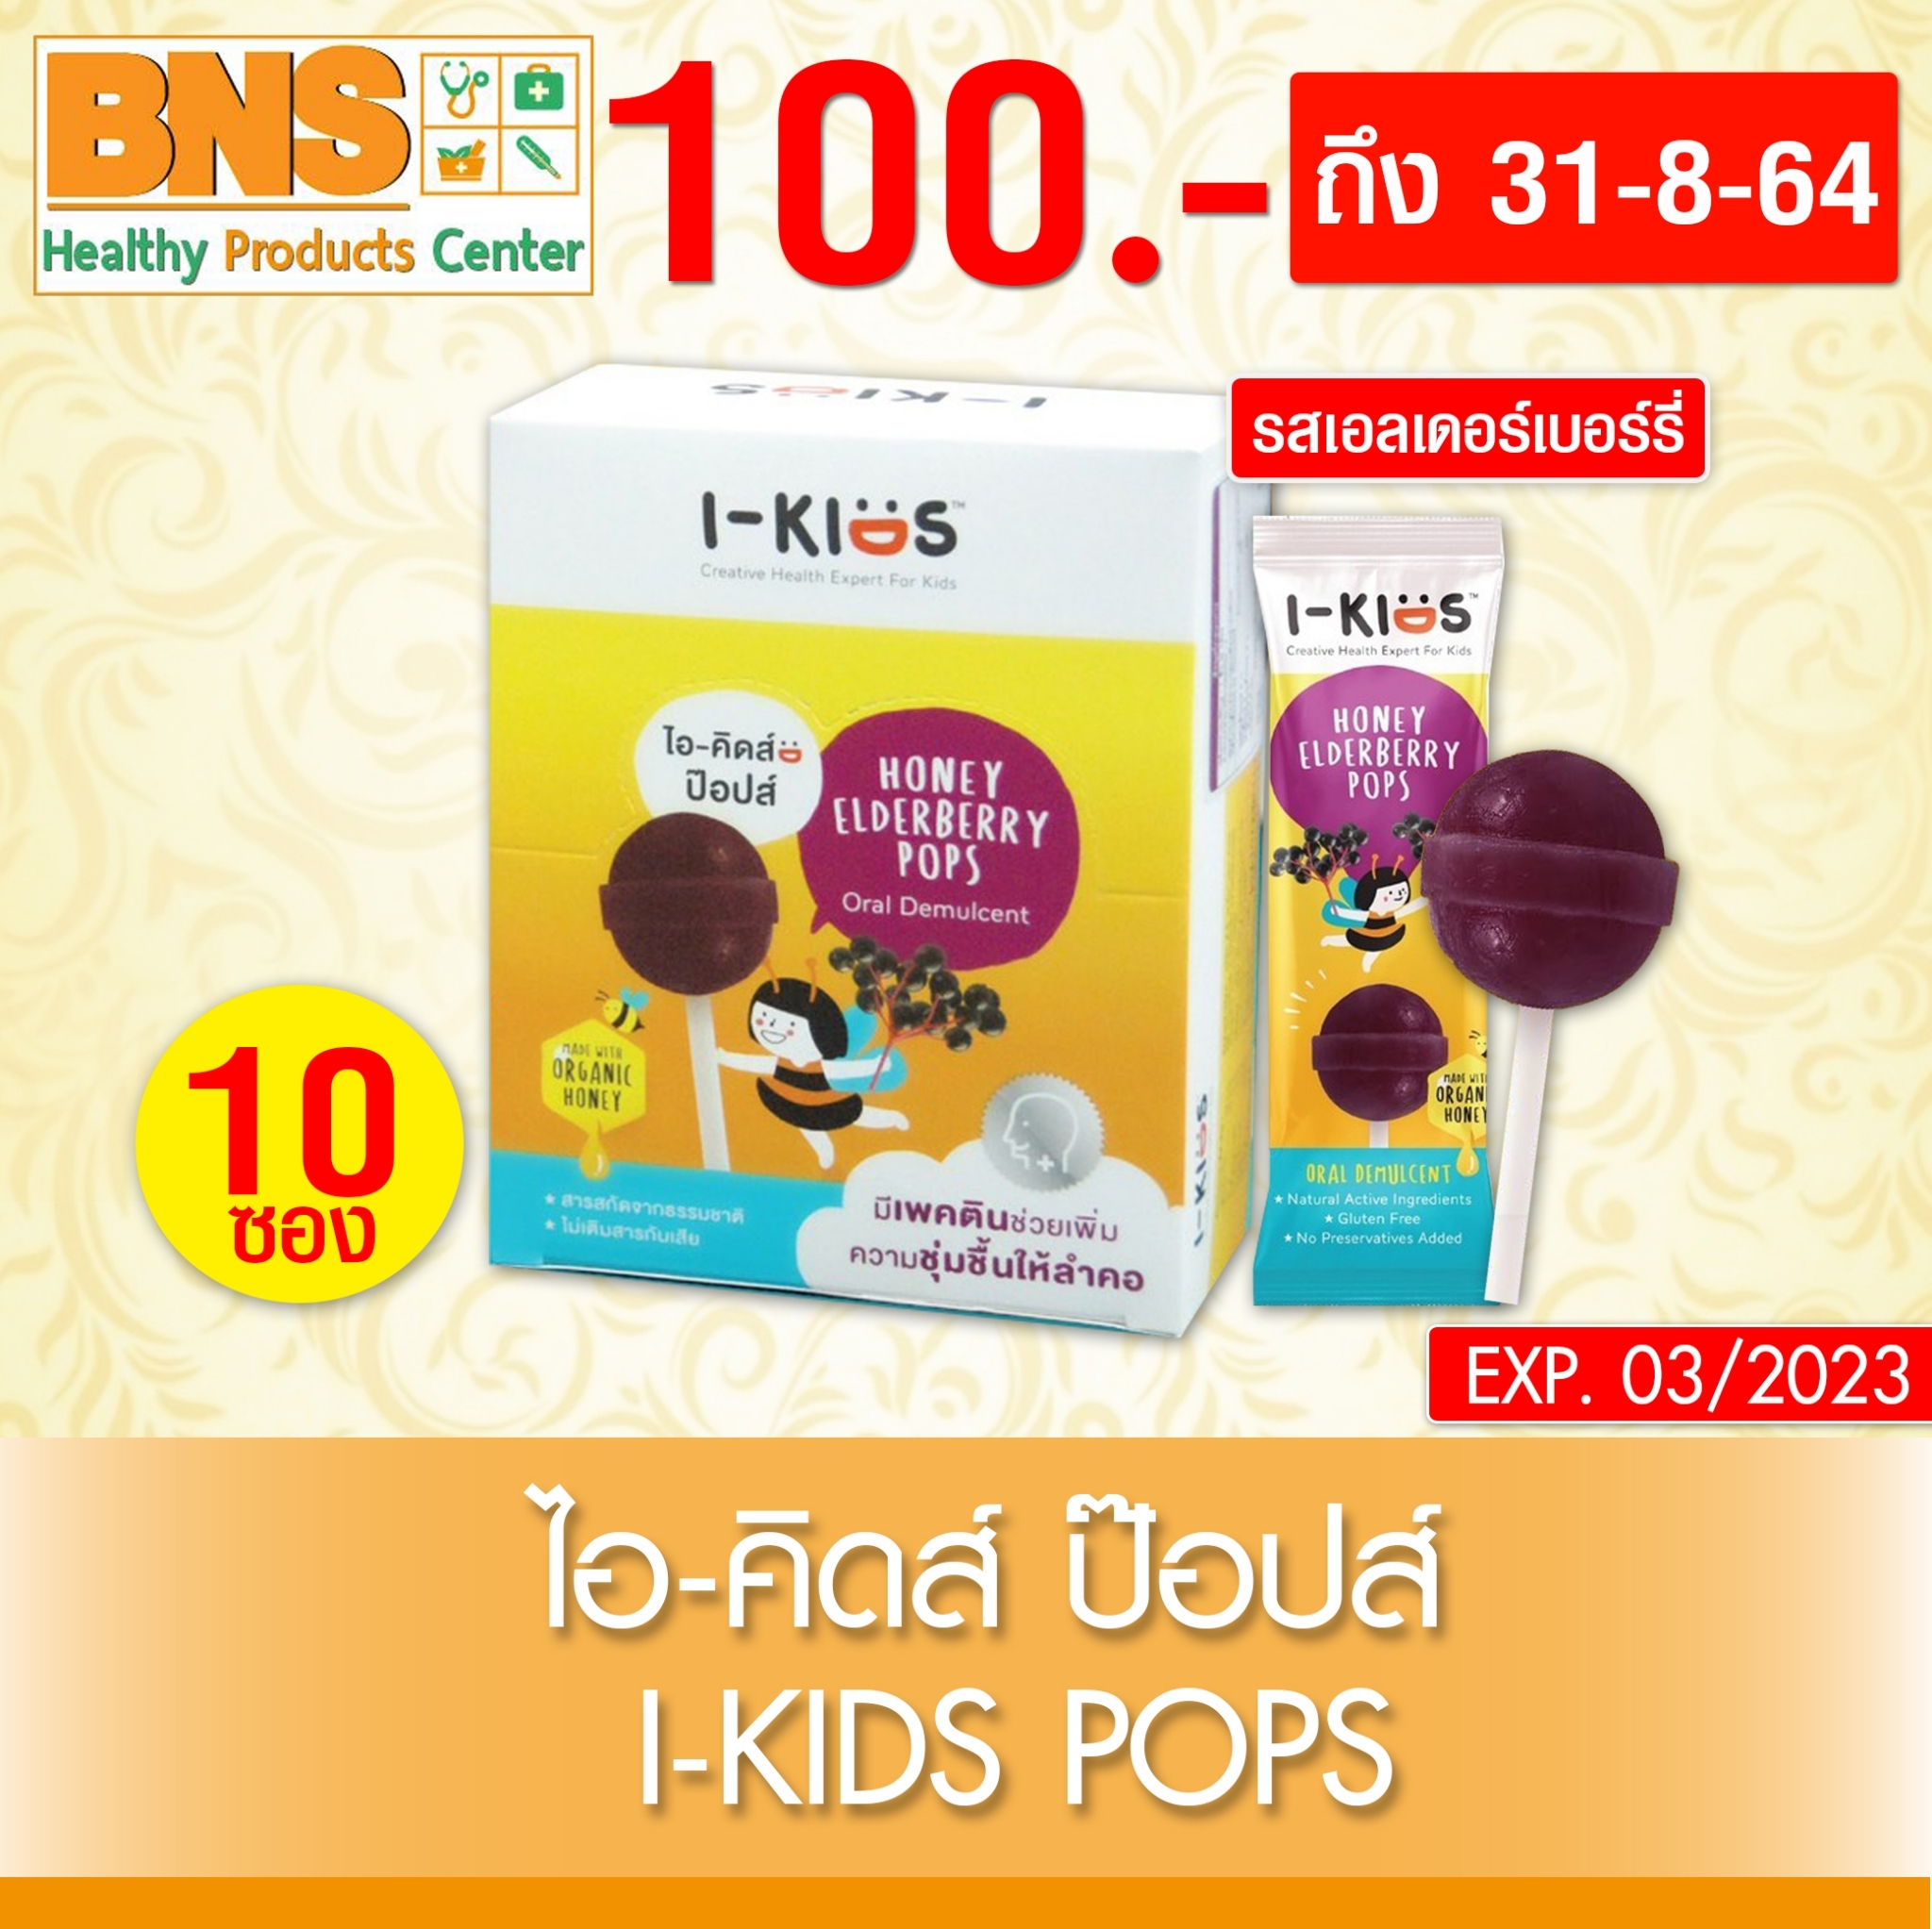 I-KIDS Elderberry Pops ไอ-คิดส์ ป๊อปส์ รสเอลเดอร์เบอรรี่ (สินค้าใหม่) (ถูกที่สุด) By BNS